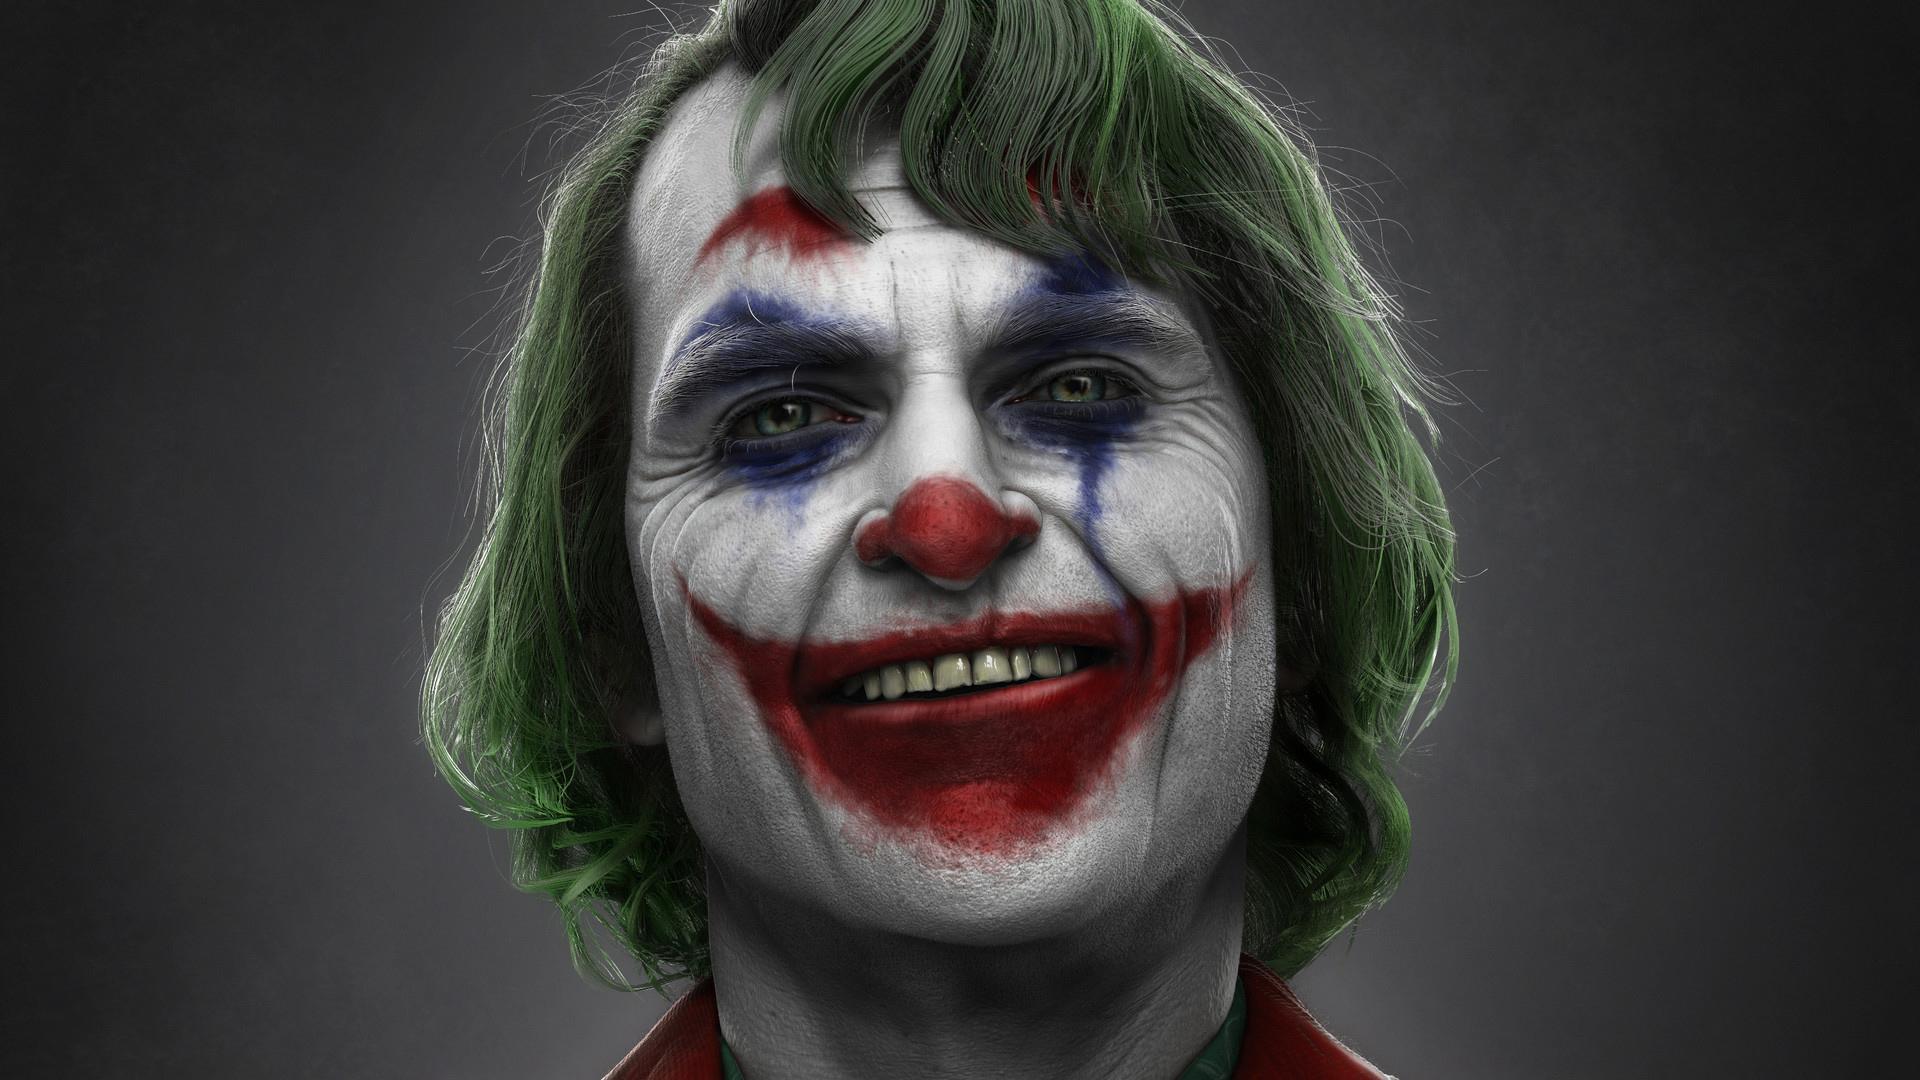 Joker 2019 Movie Wallpaper & Joker 2019 Facts!